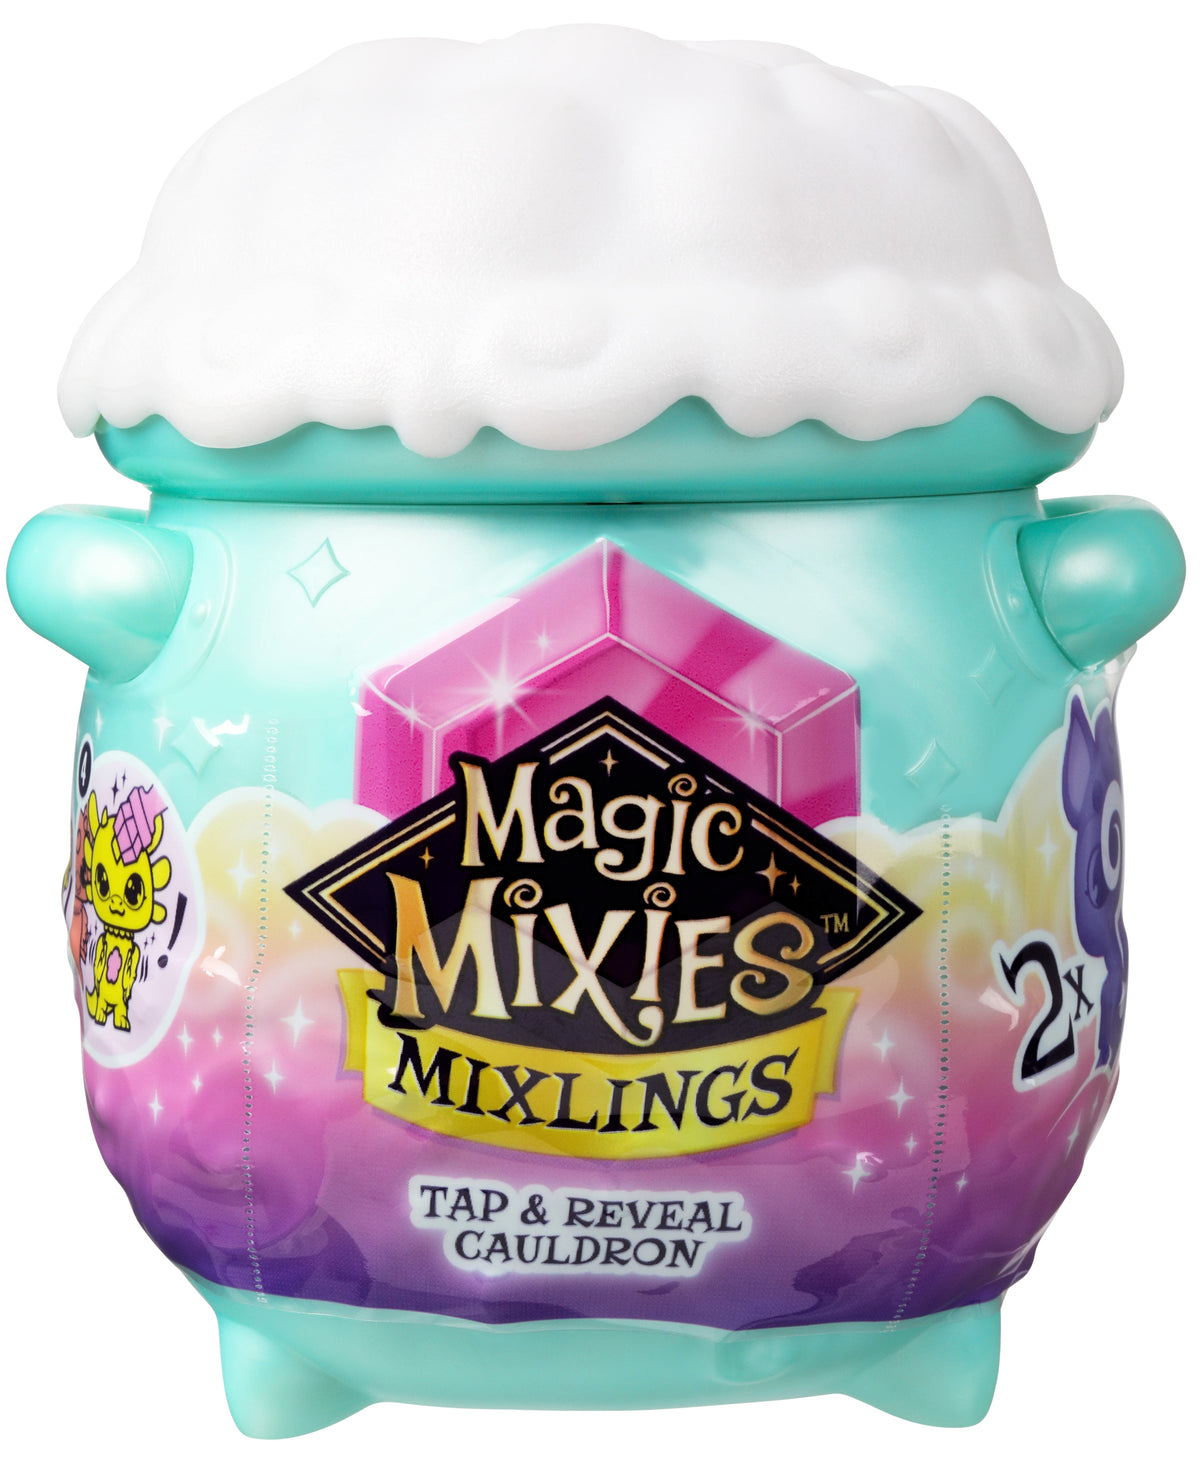 Magic Mixies - Mixlings Duo Pack Tap & Reveal